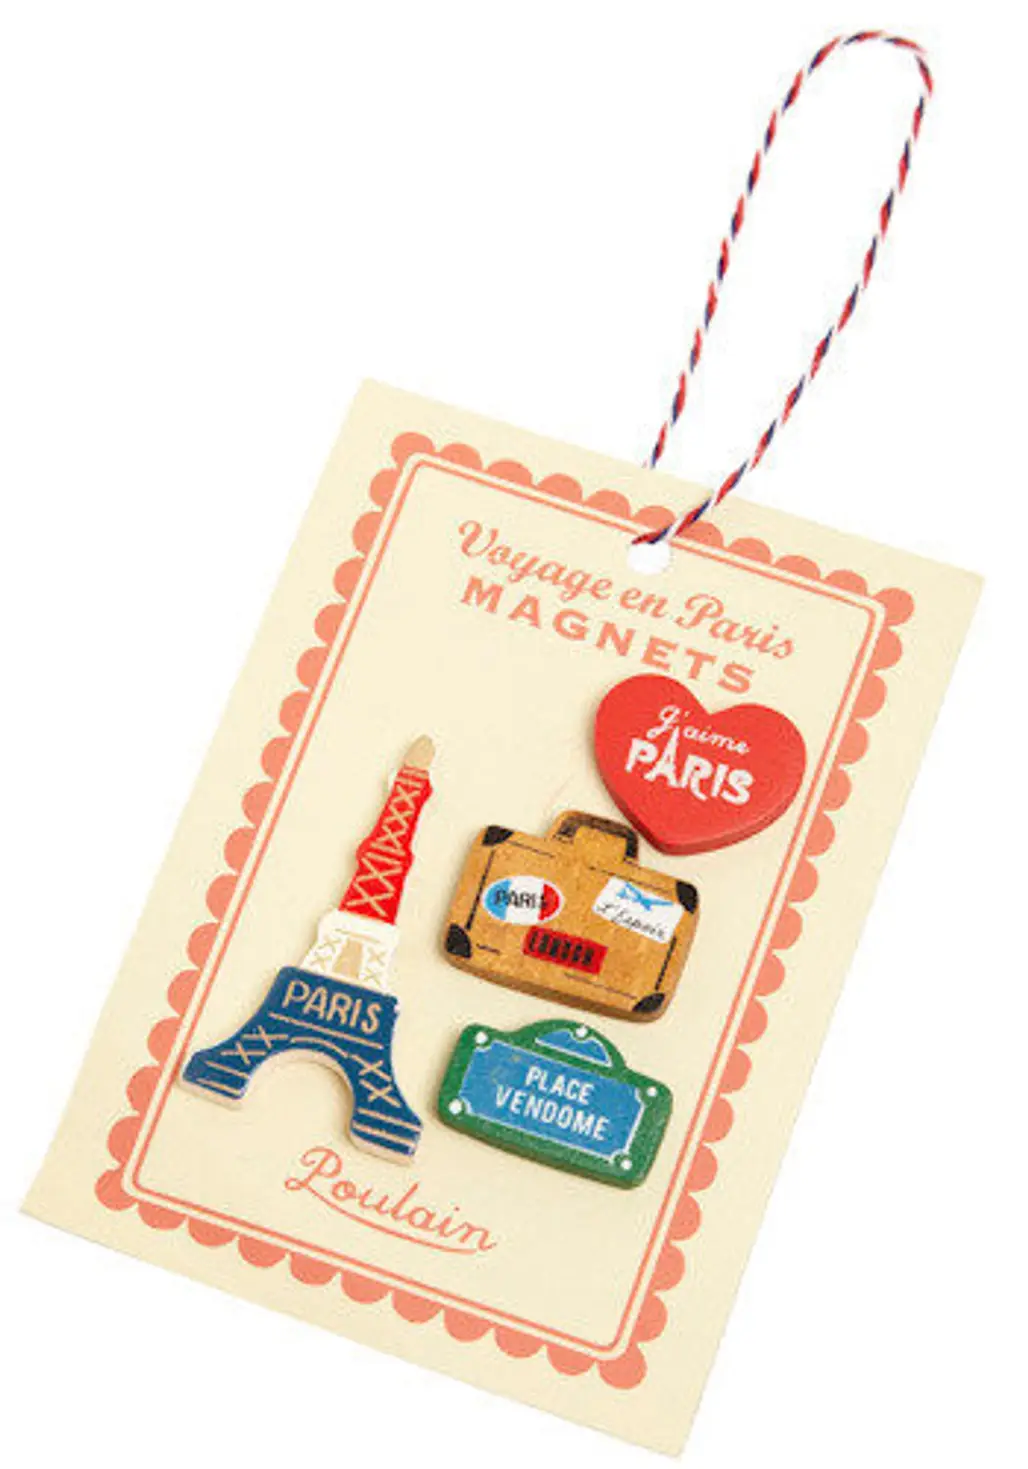 Paris-themed Magnets